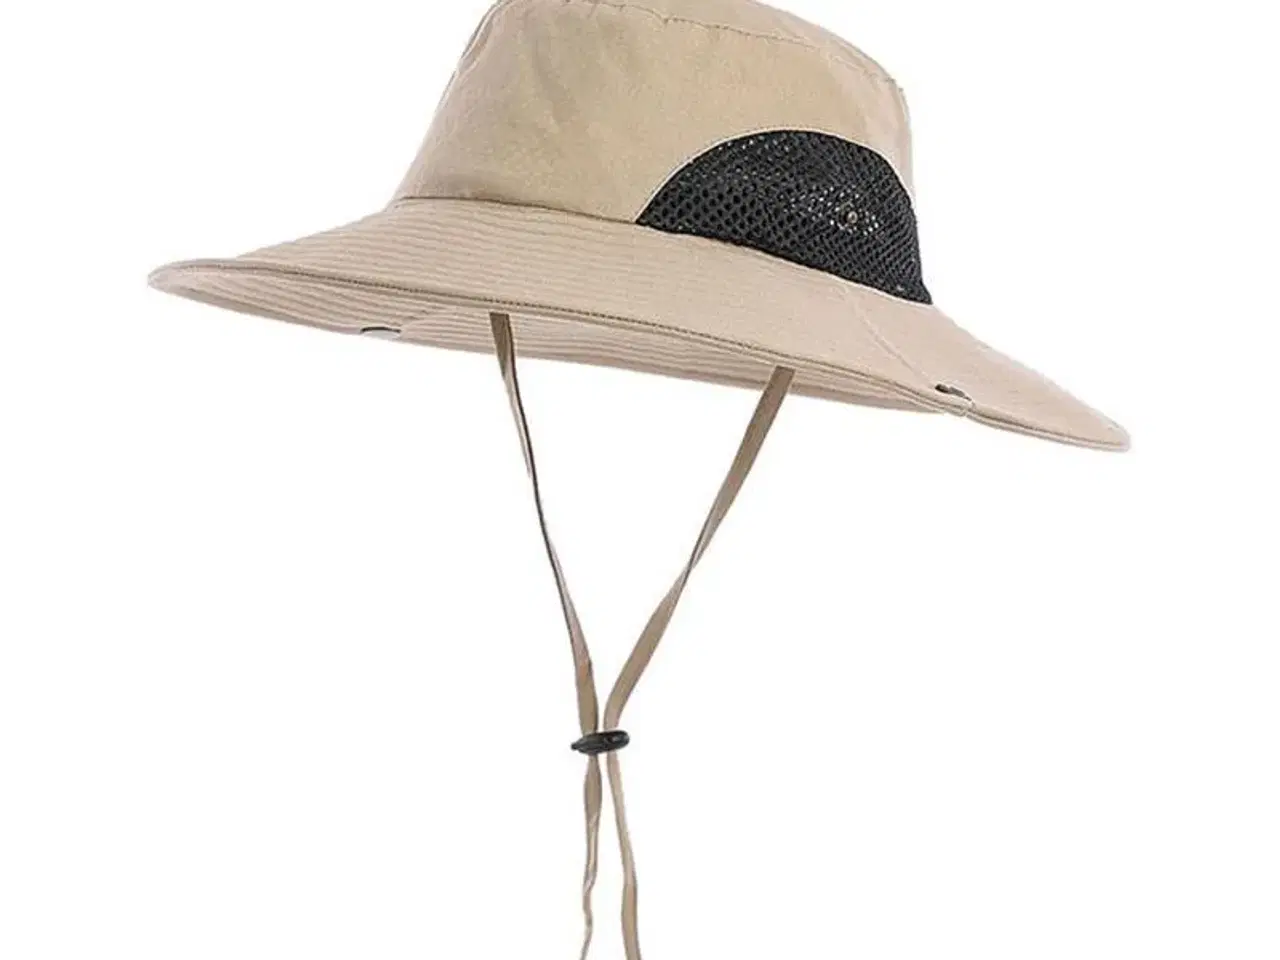 Billede 1 - Ny: Bøllehatte boonie hat med bred skygge 